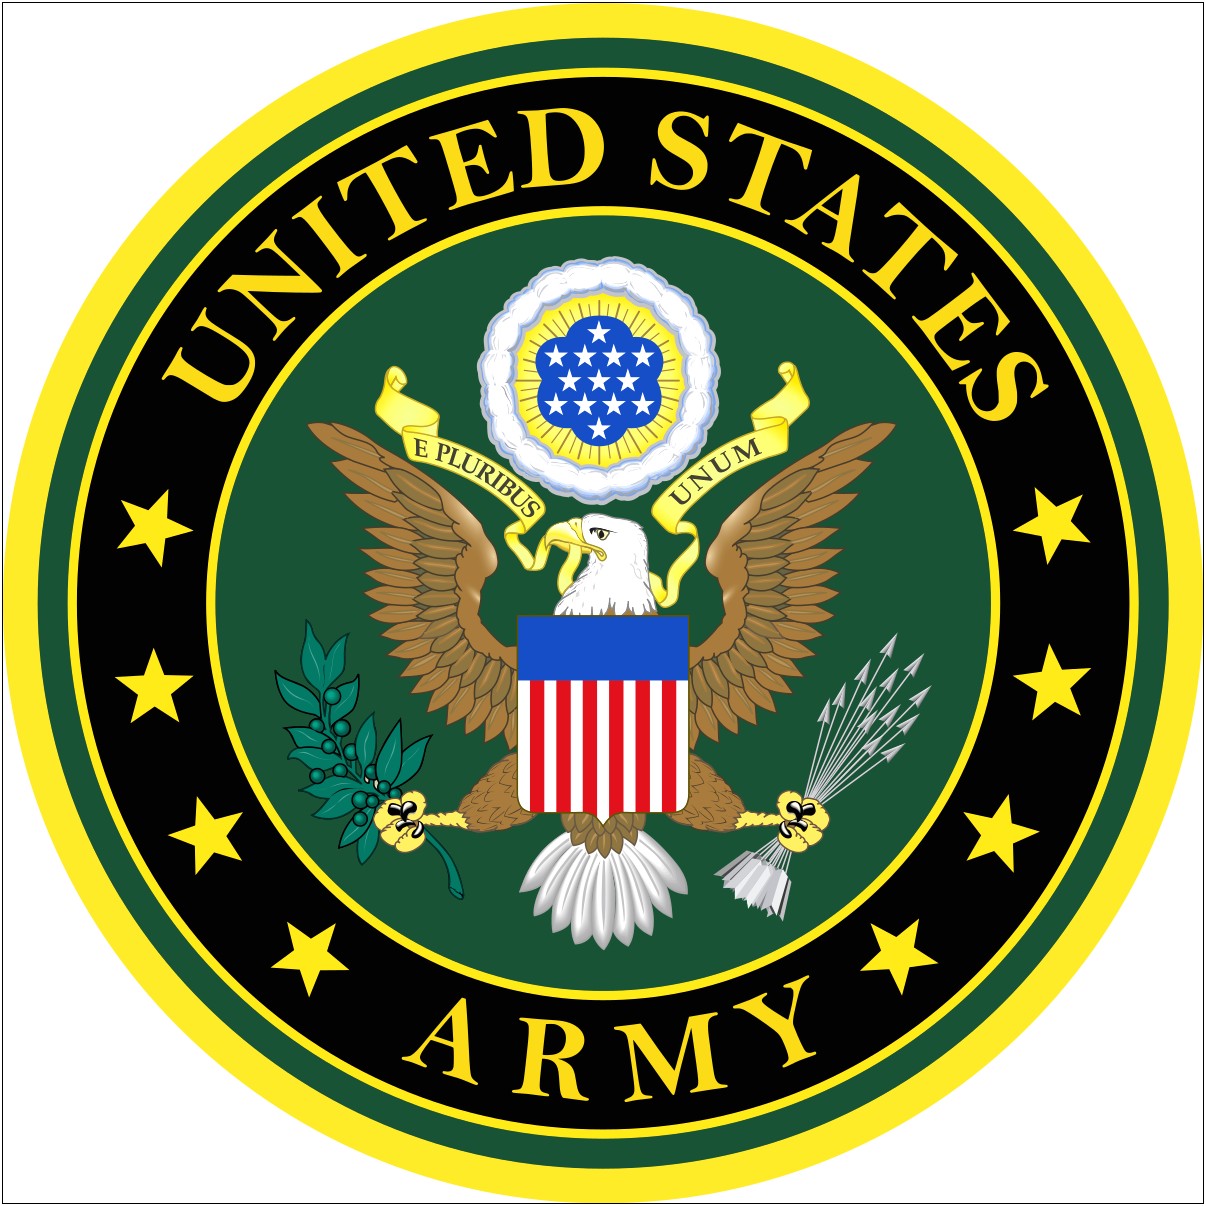 Headquarts Infantry Platoon Seargent Job Description Resume